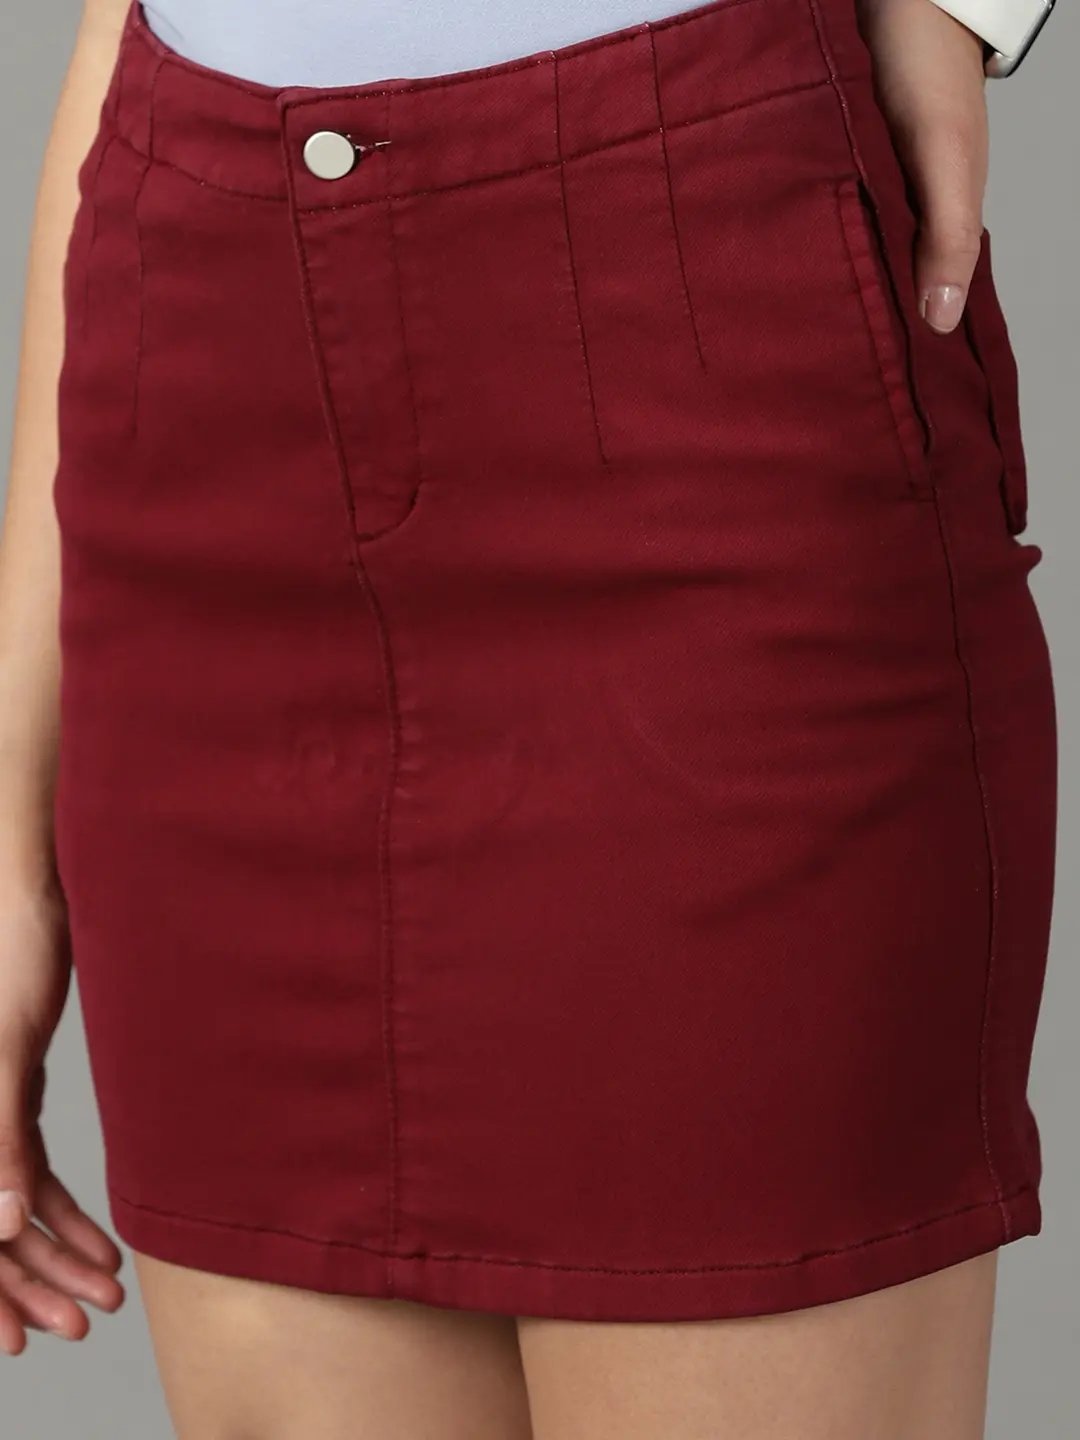 SHOWOFF Women's Solid Burgundy Denim Pencil Skirt